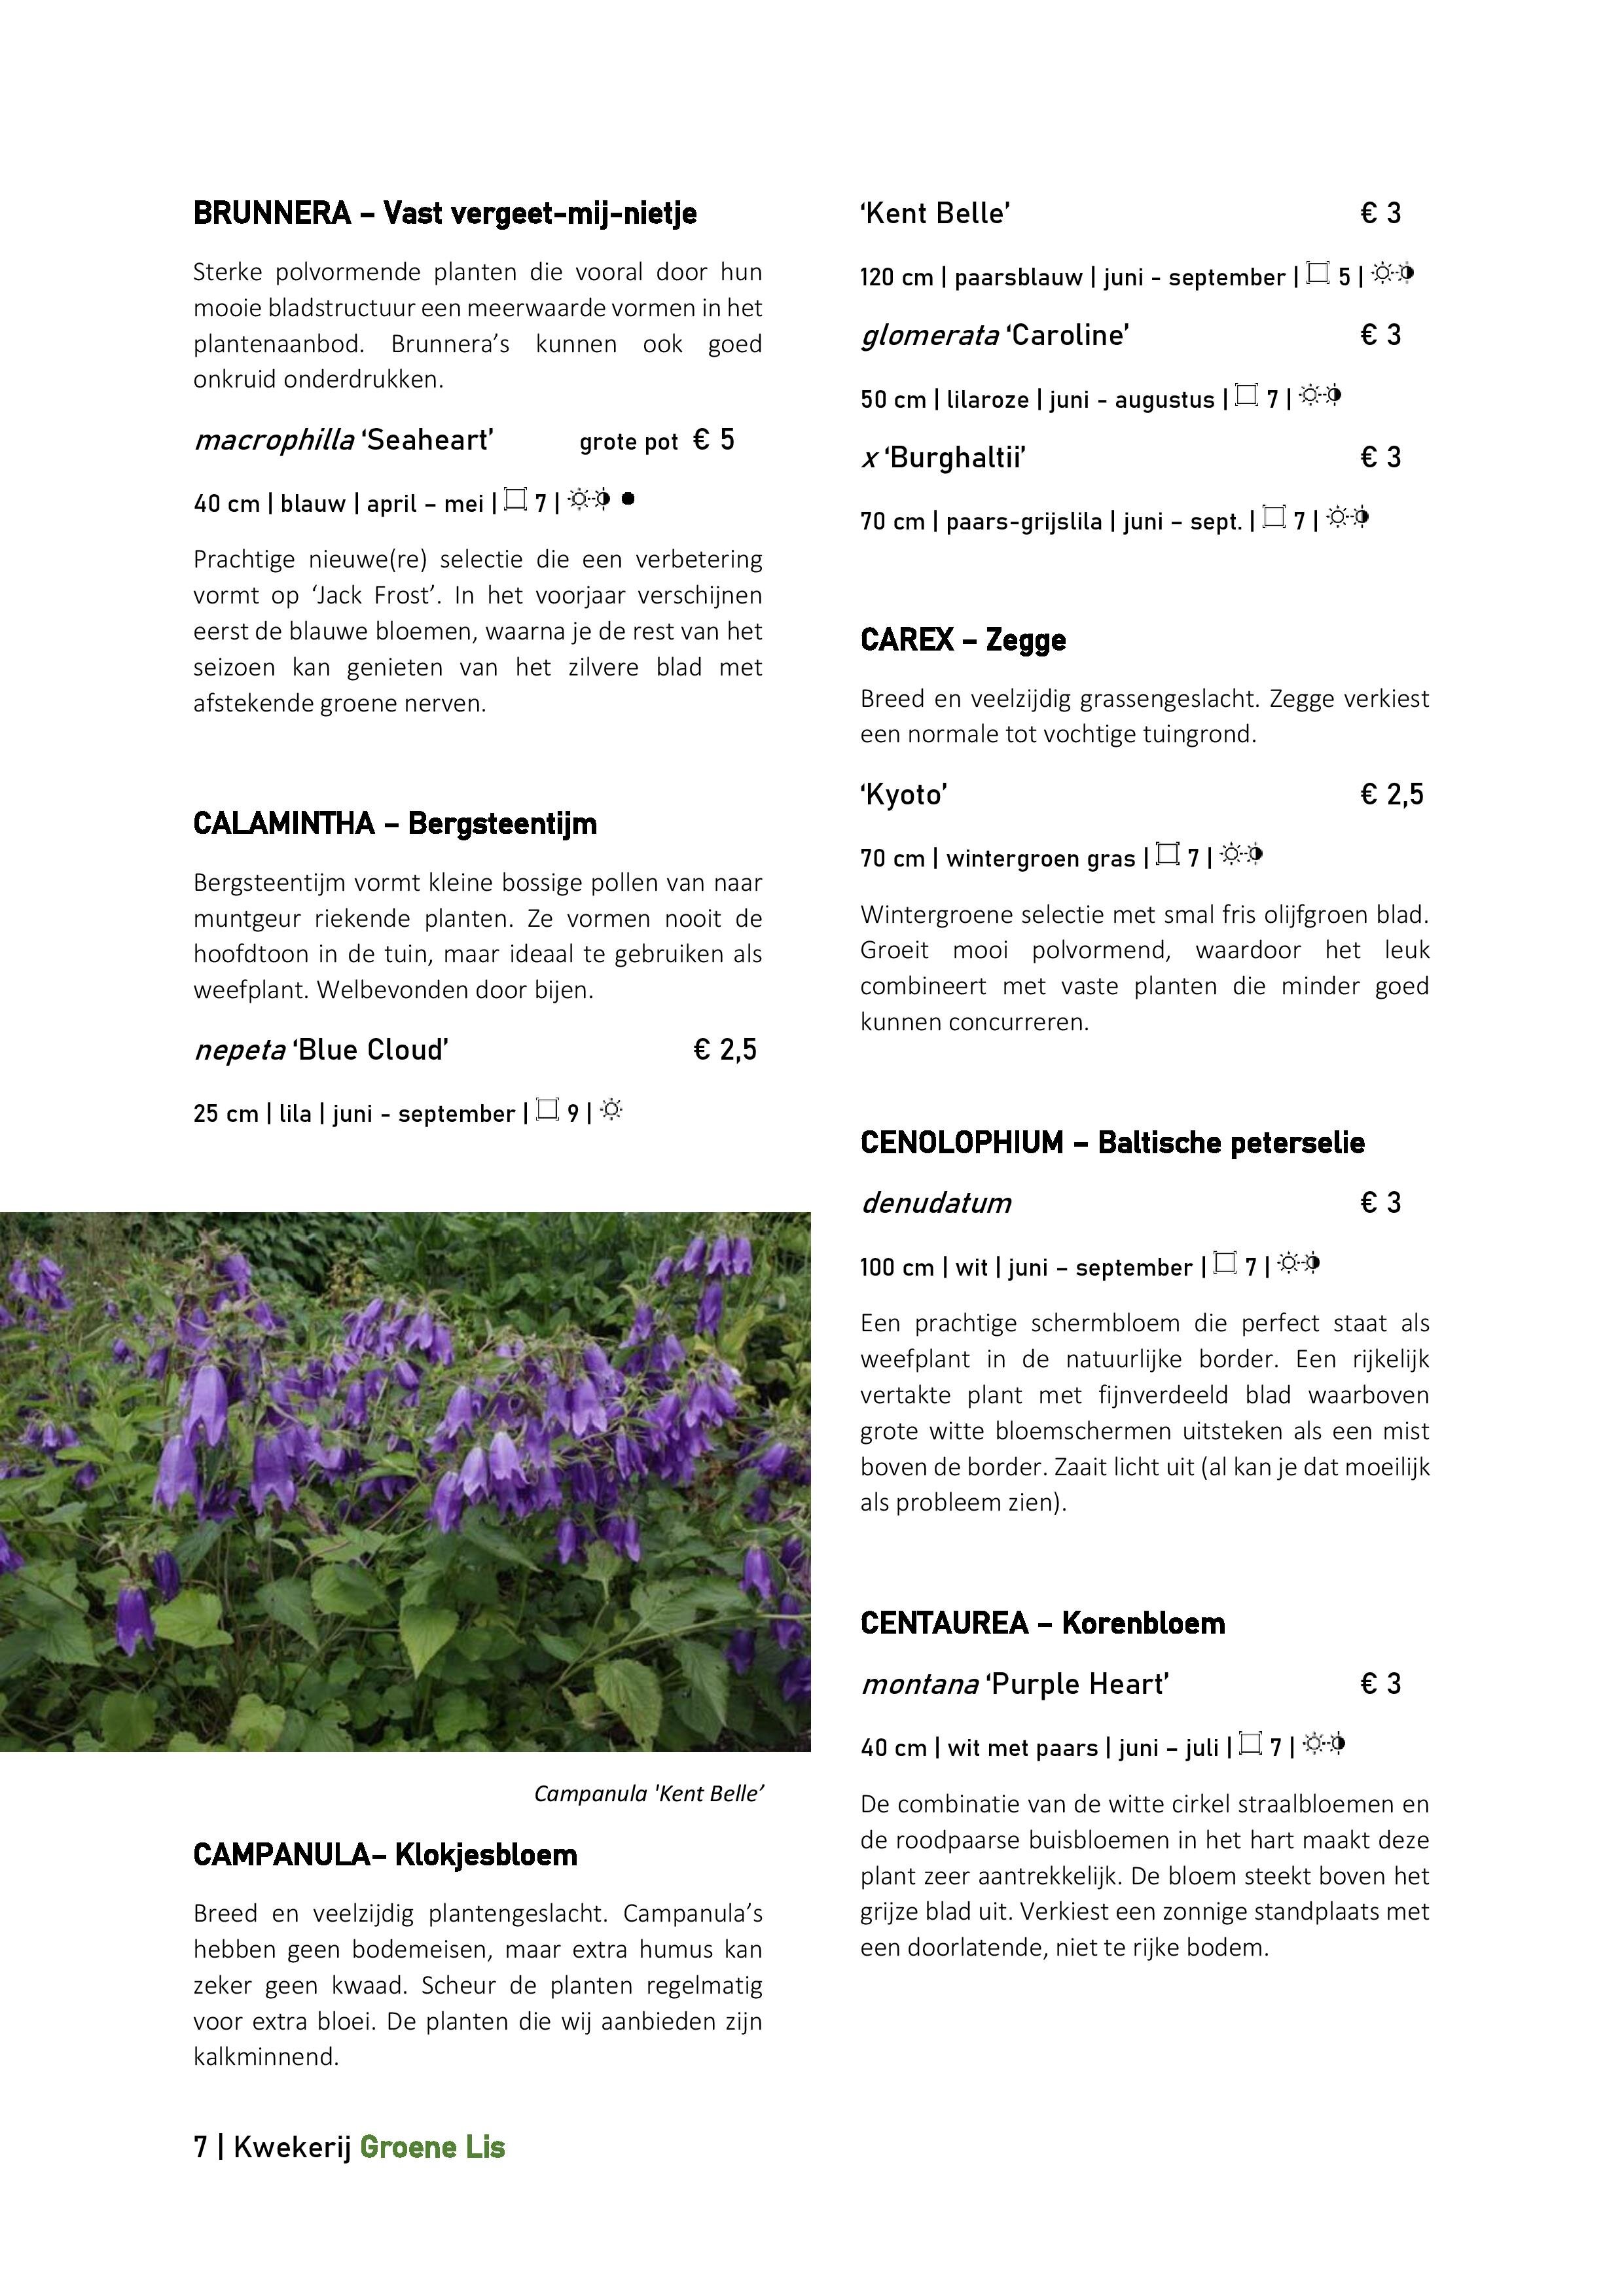 Catalogus_Groene Lis_2020-page-007.jpg